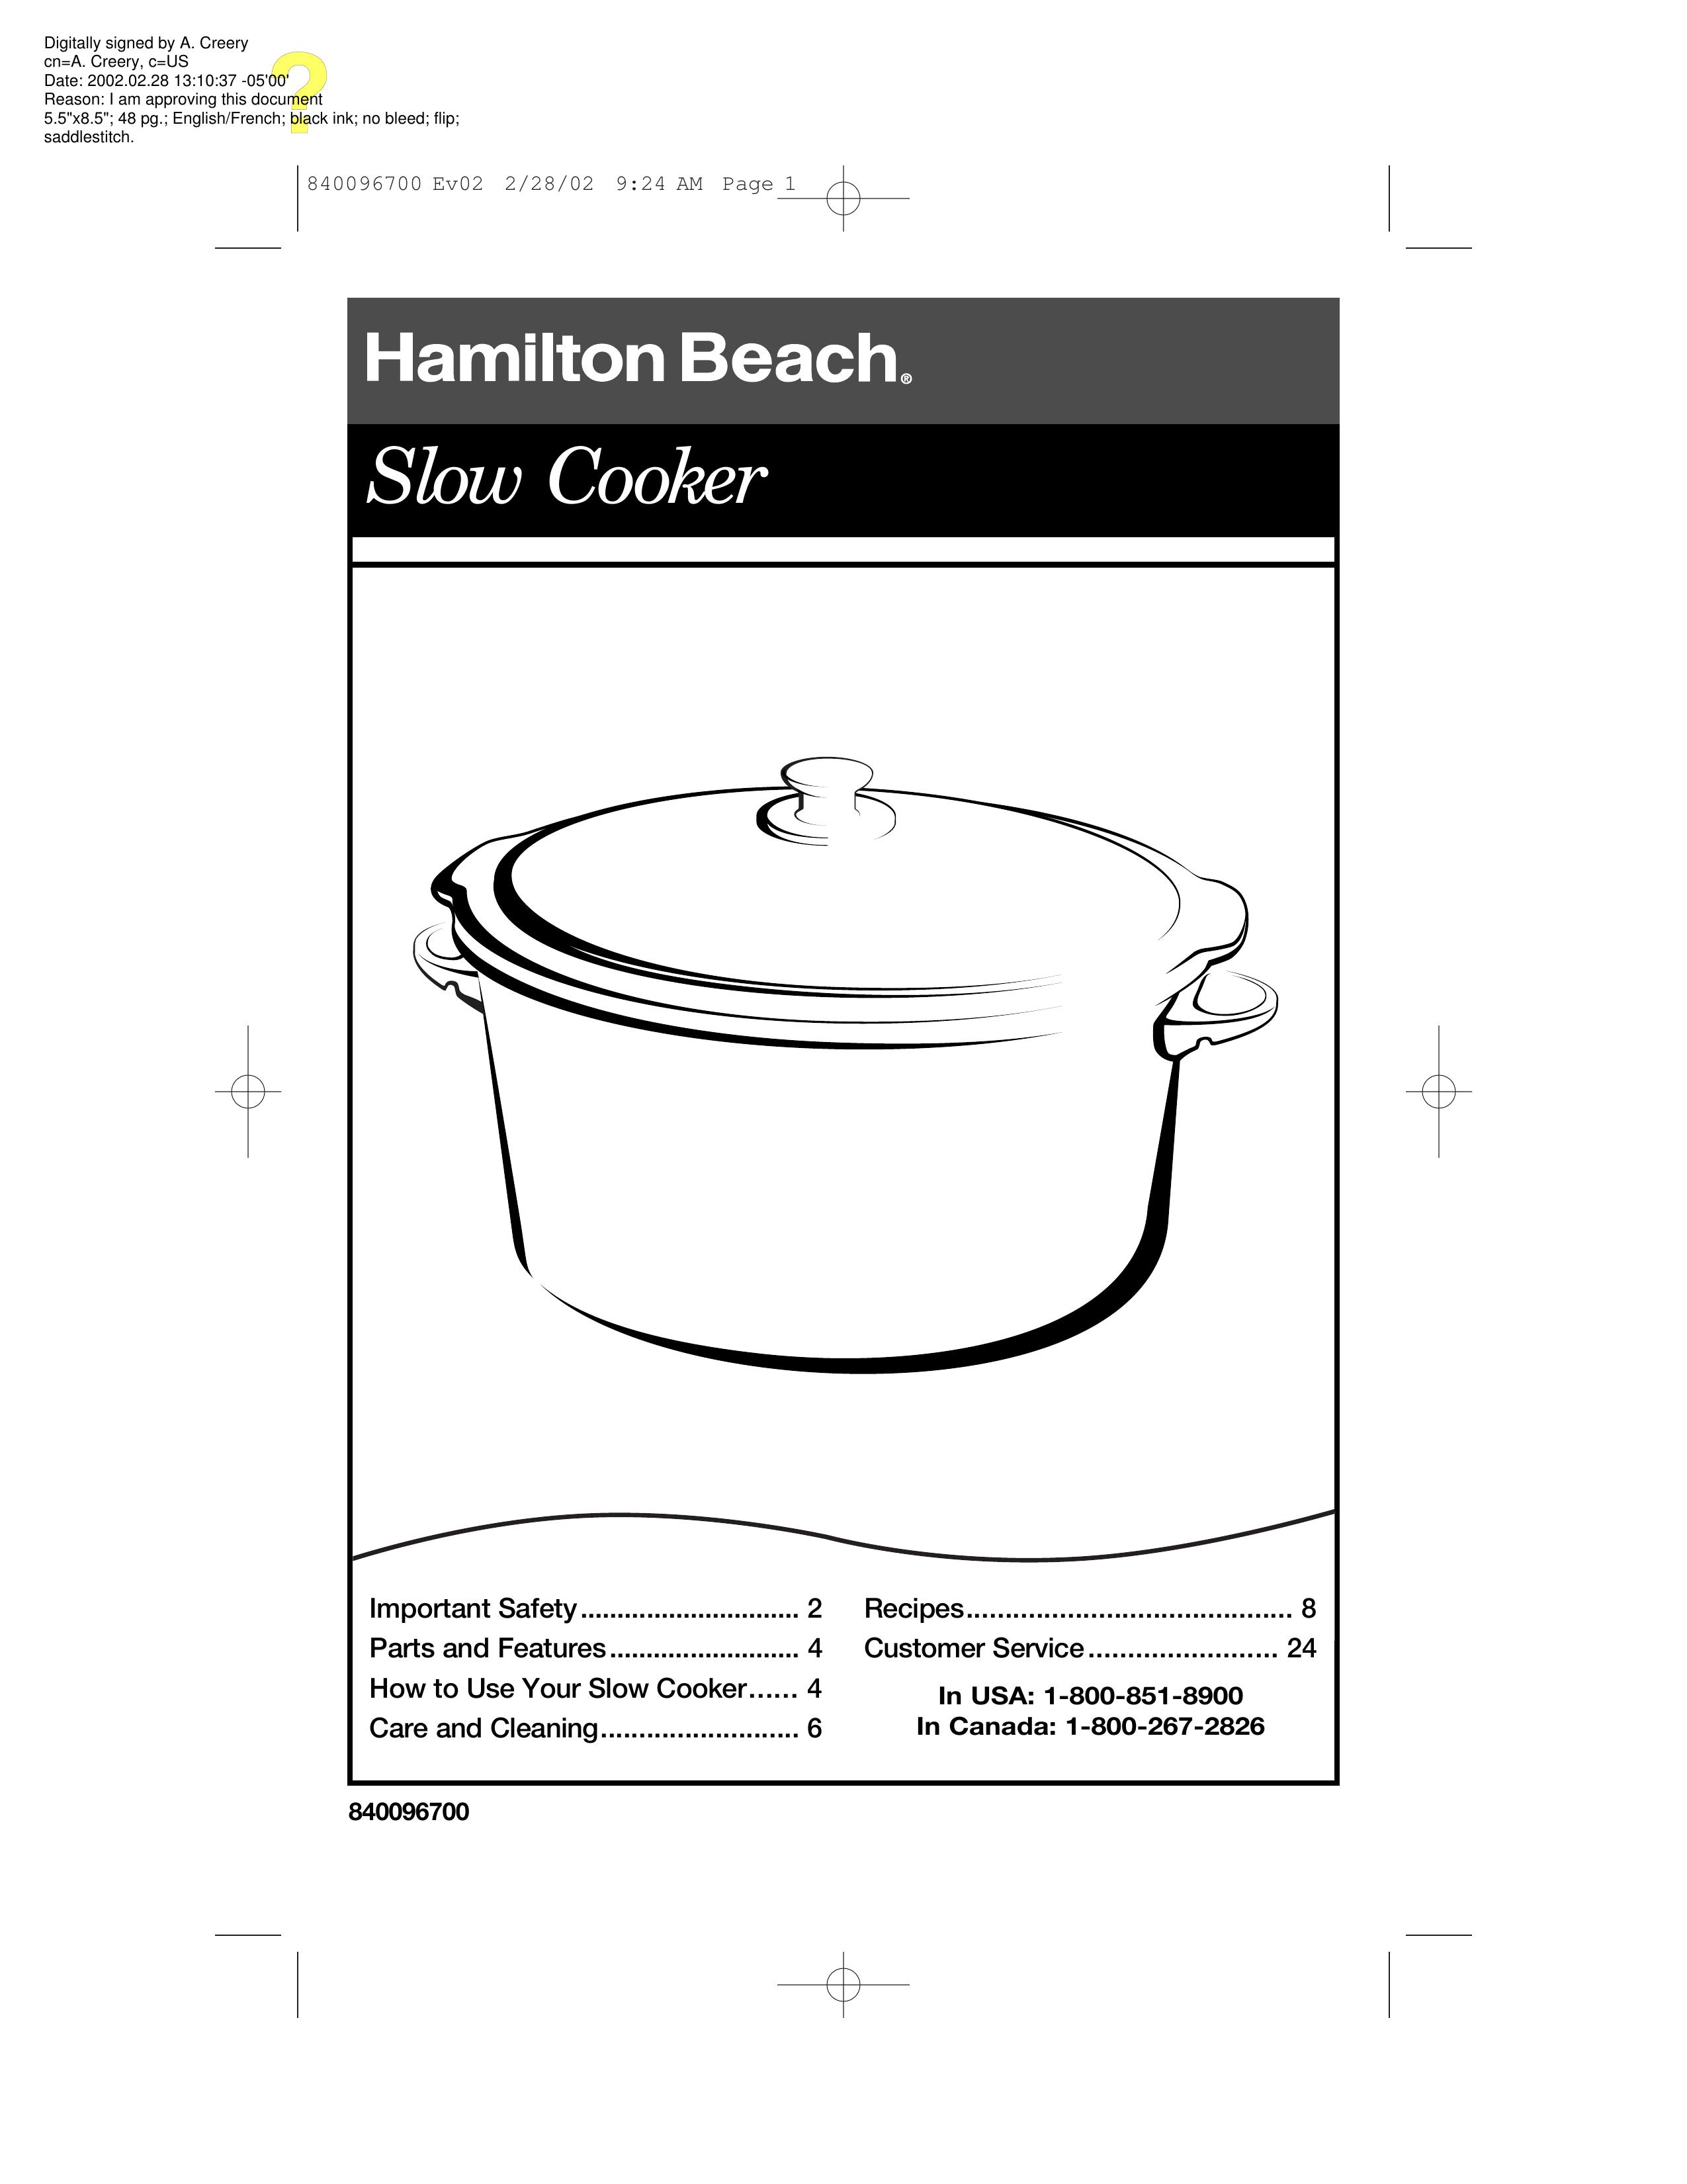 Hamilton Beach 840096700 Slow Cooker User Manual